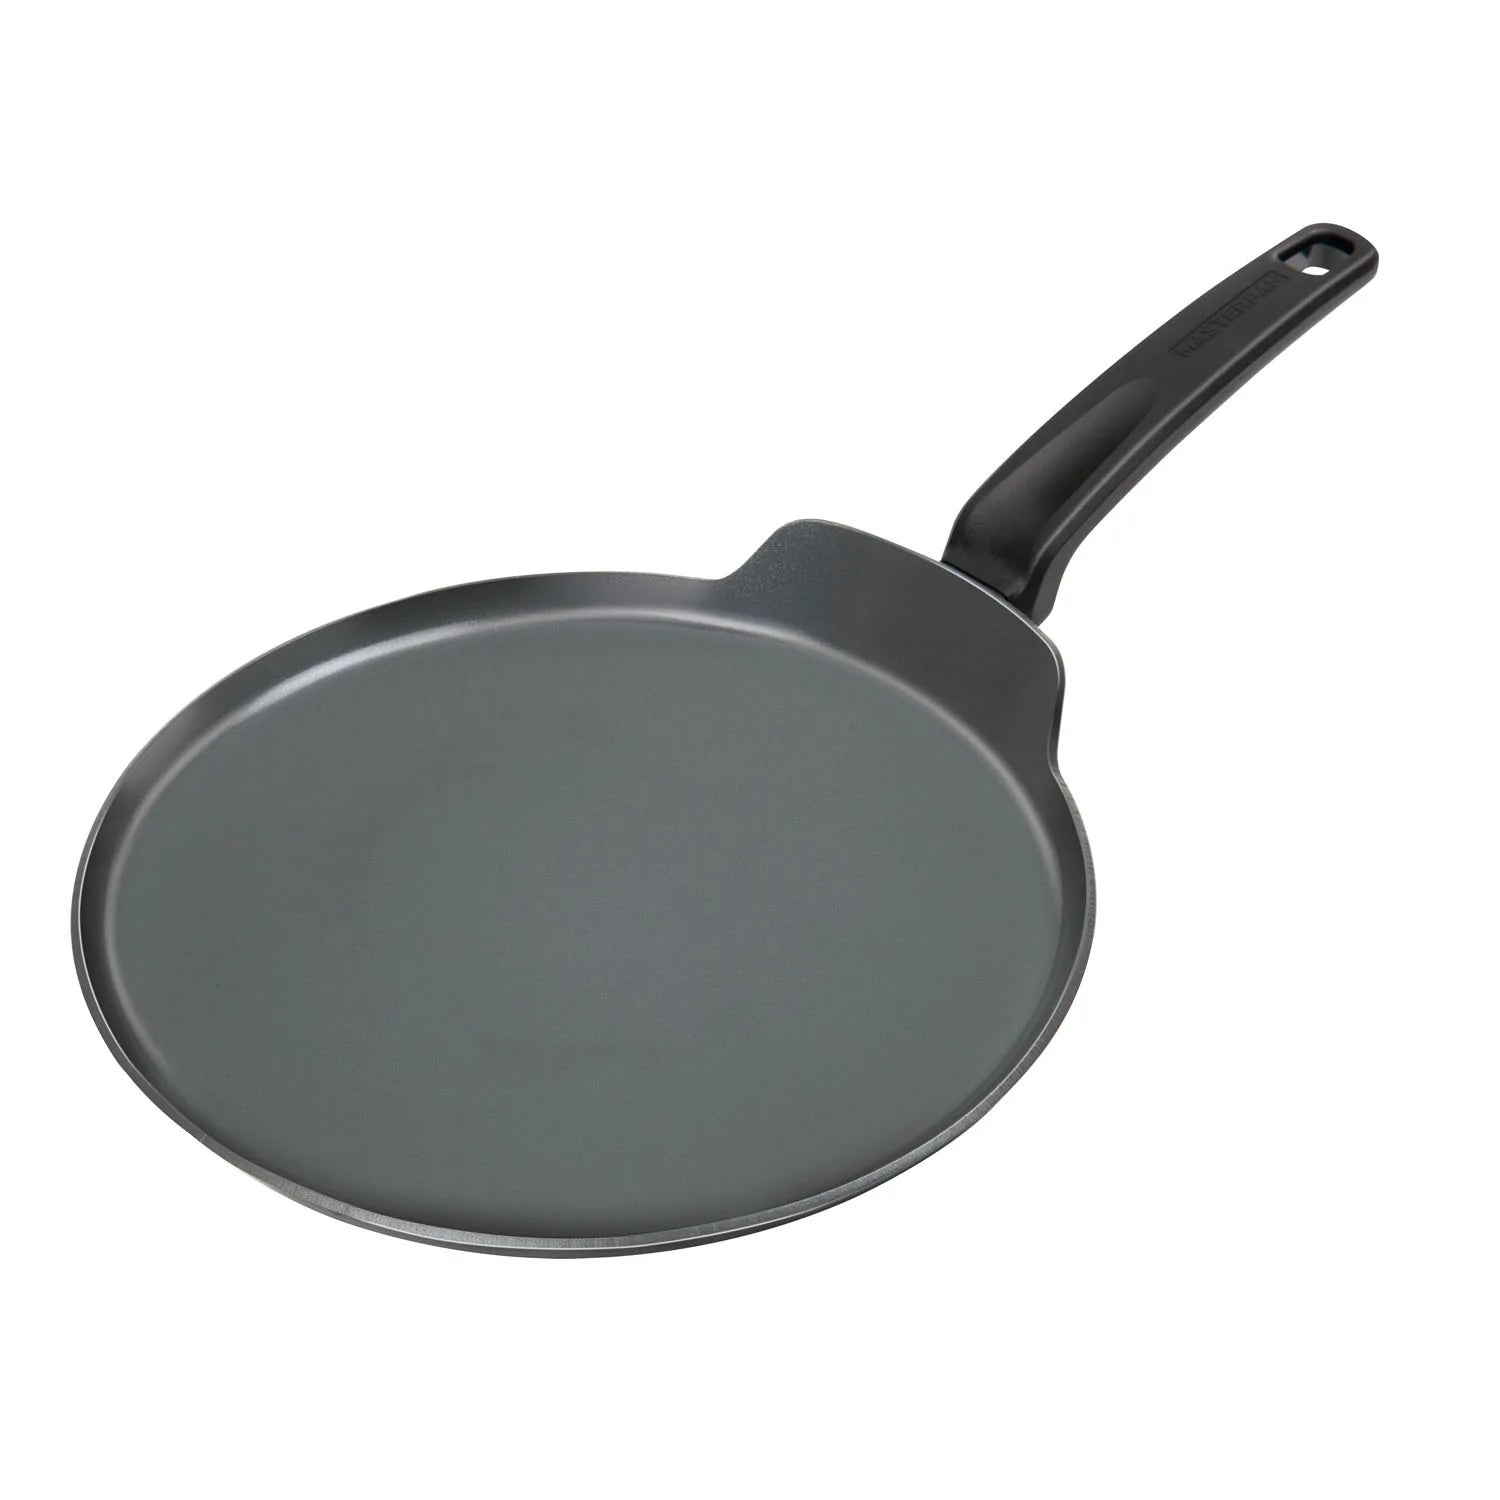 Crepe Pan, Healthy Ceramic Non-Stick Aluminium Cookware With